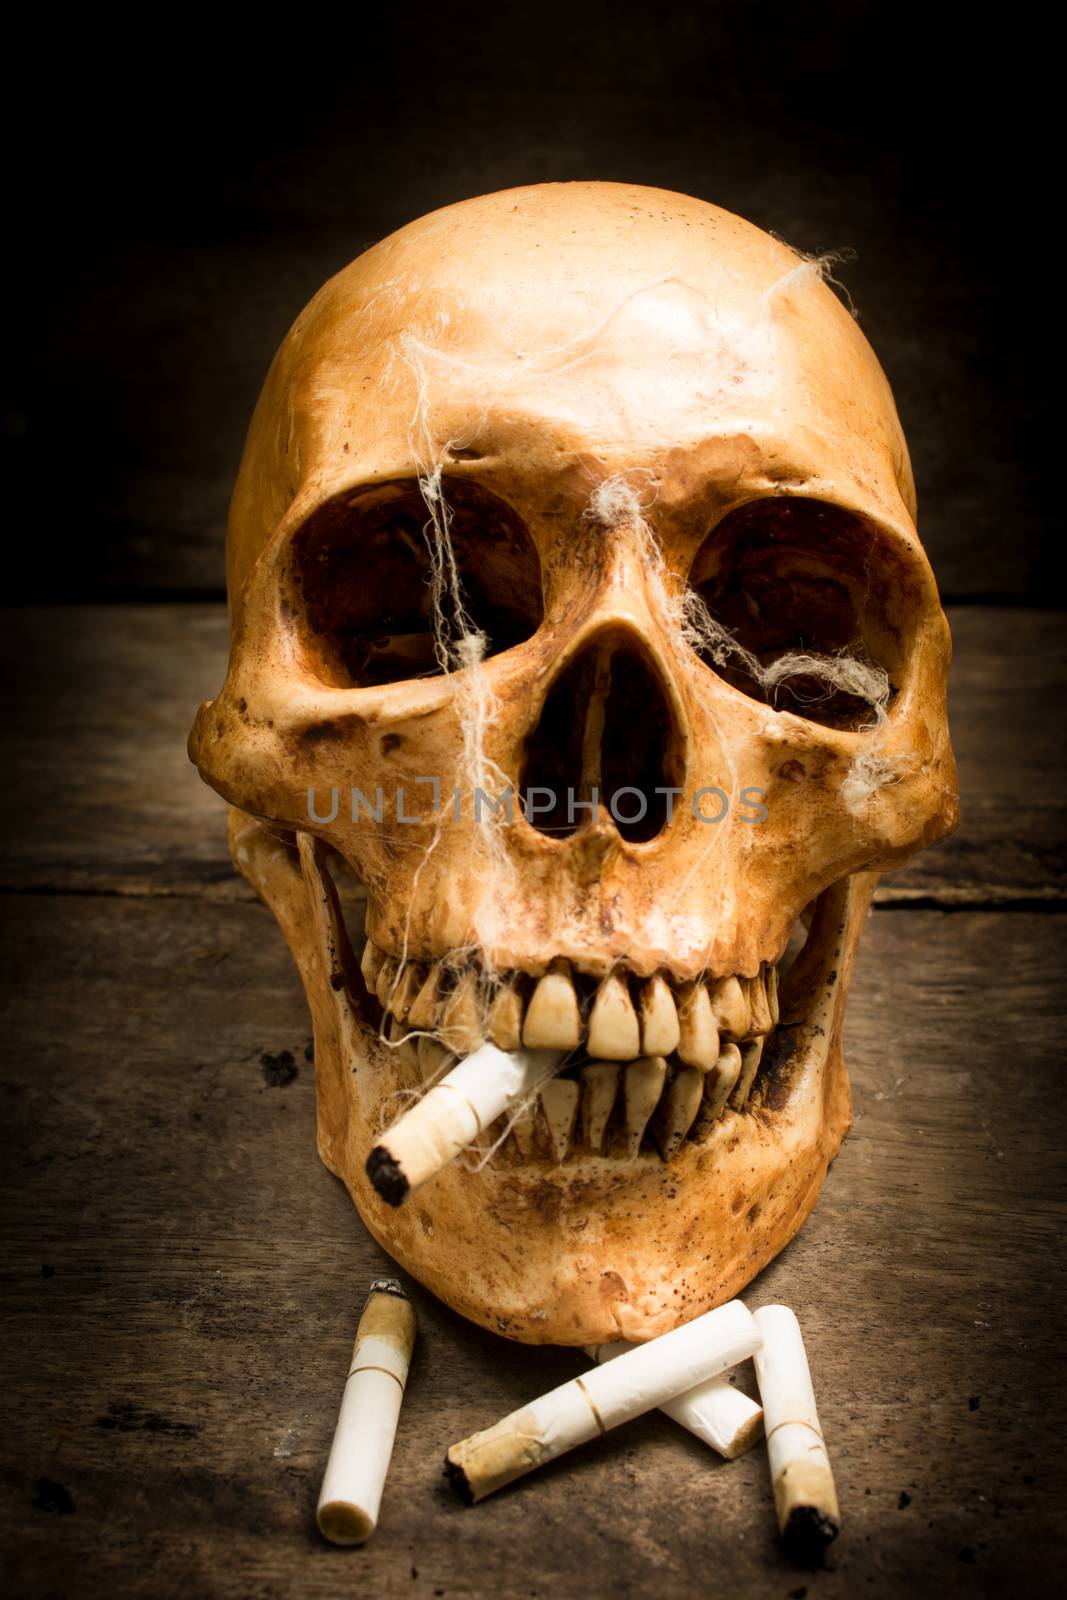 Skull with cigarettes, still life. by Tachjang